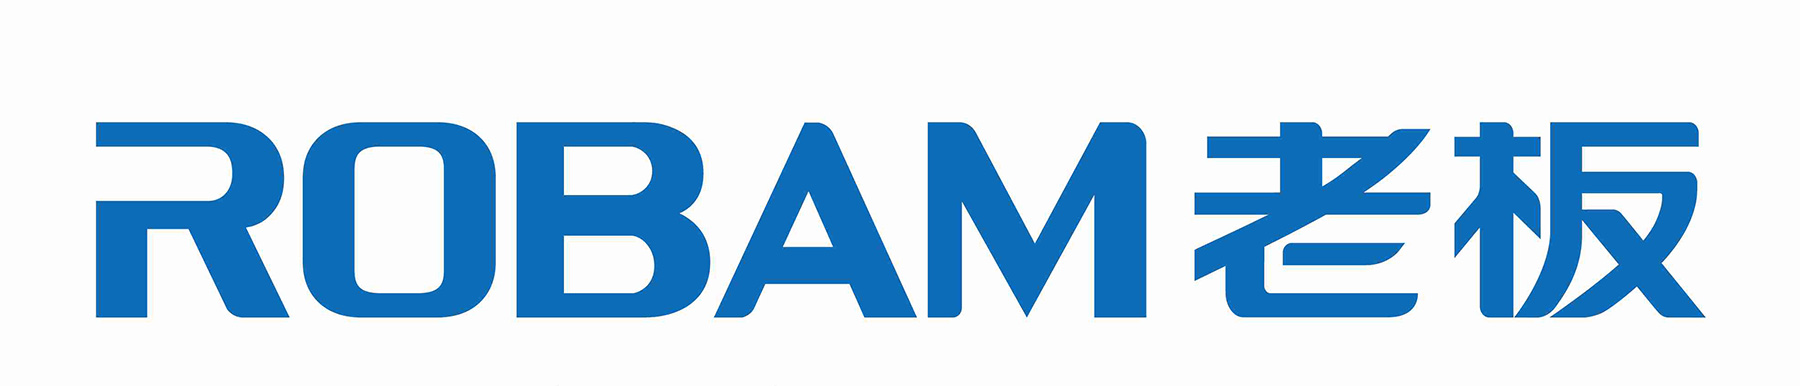 Robam Brand Logo